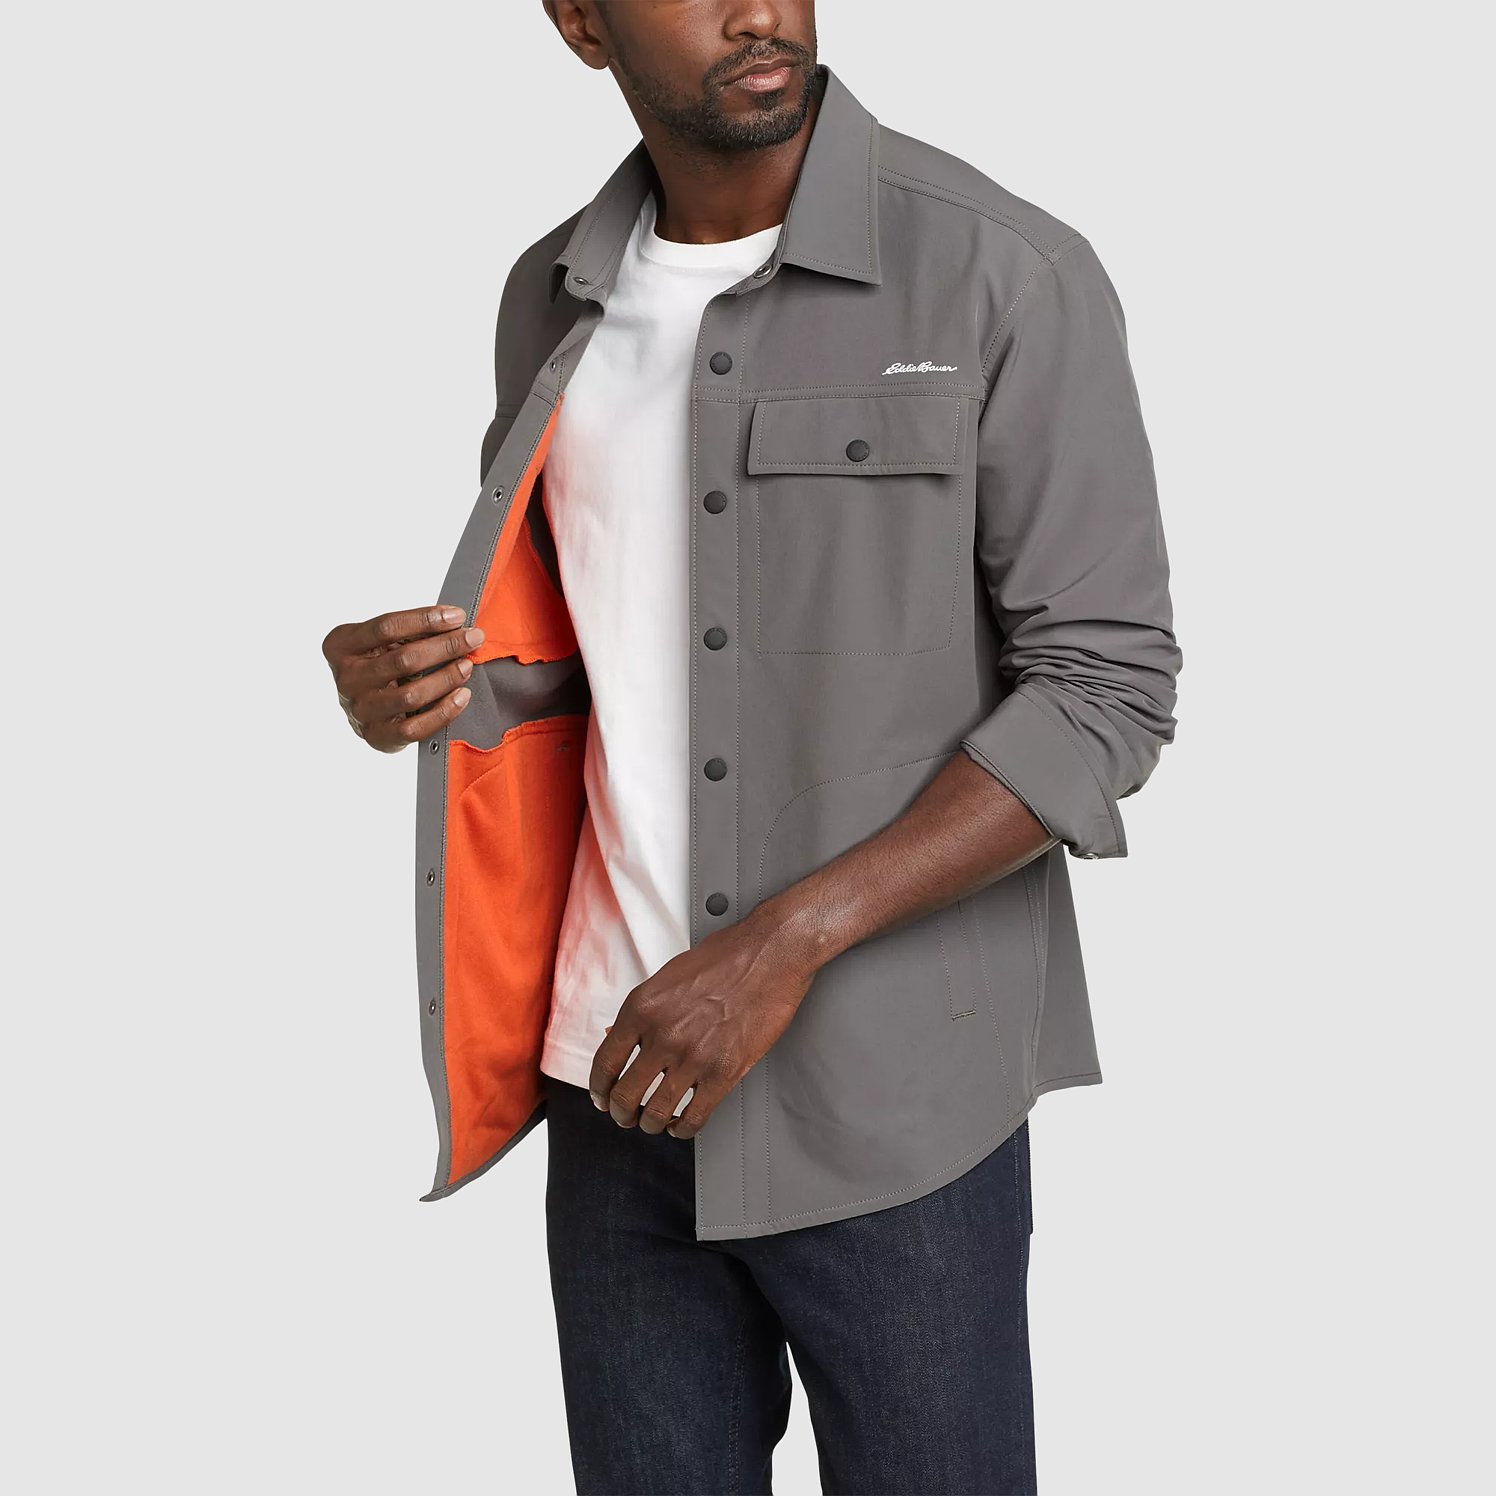 Eddie Bauer Men's Long-Sleeve Swift Myth Thermal Shirt Jacket - Grey - XLarge